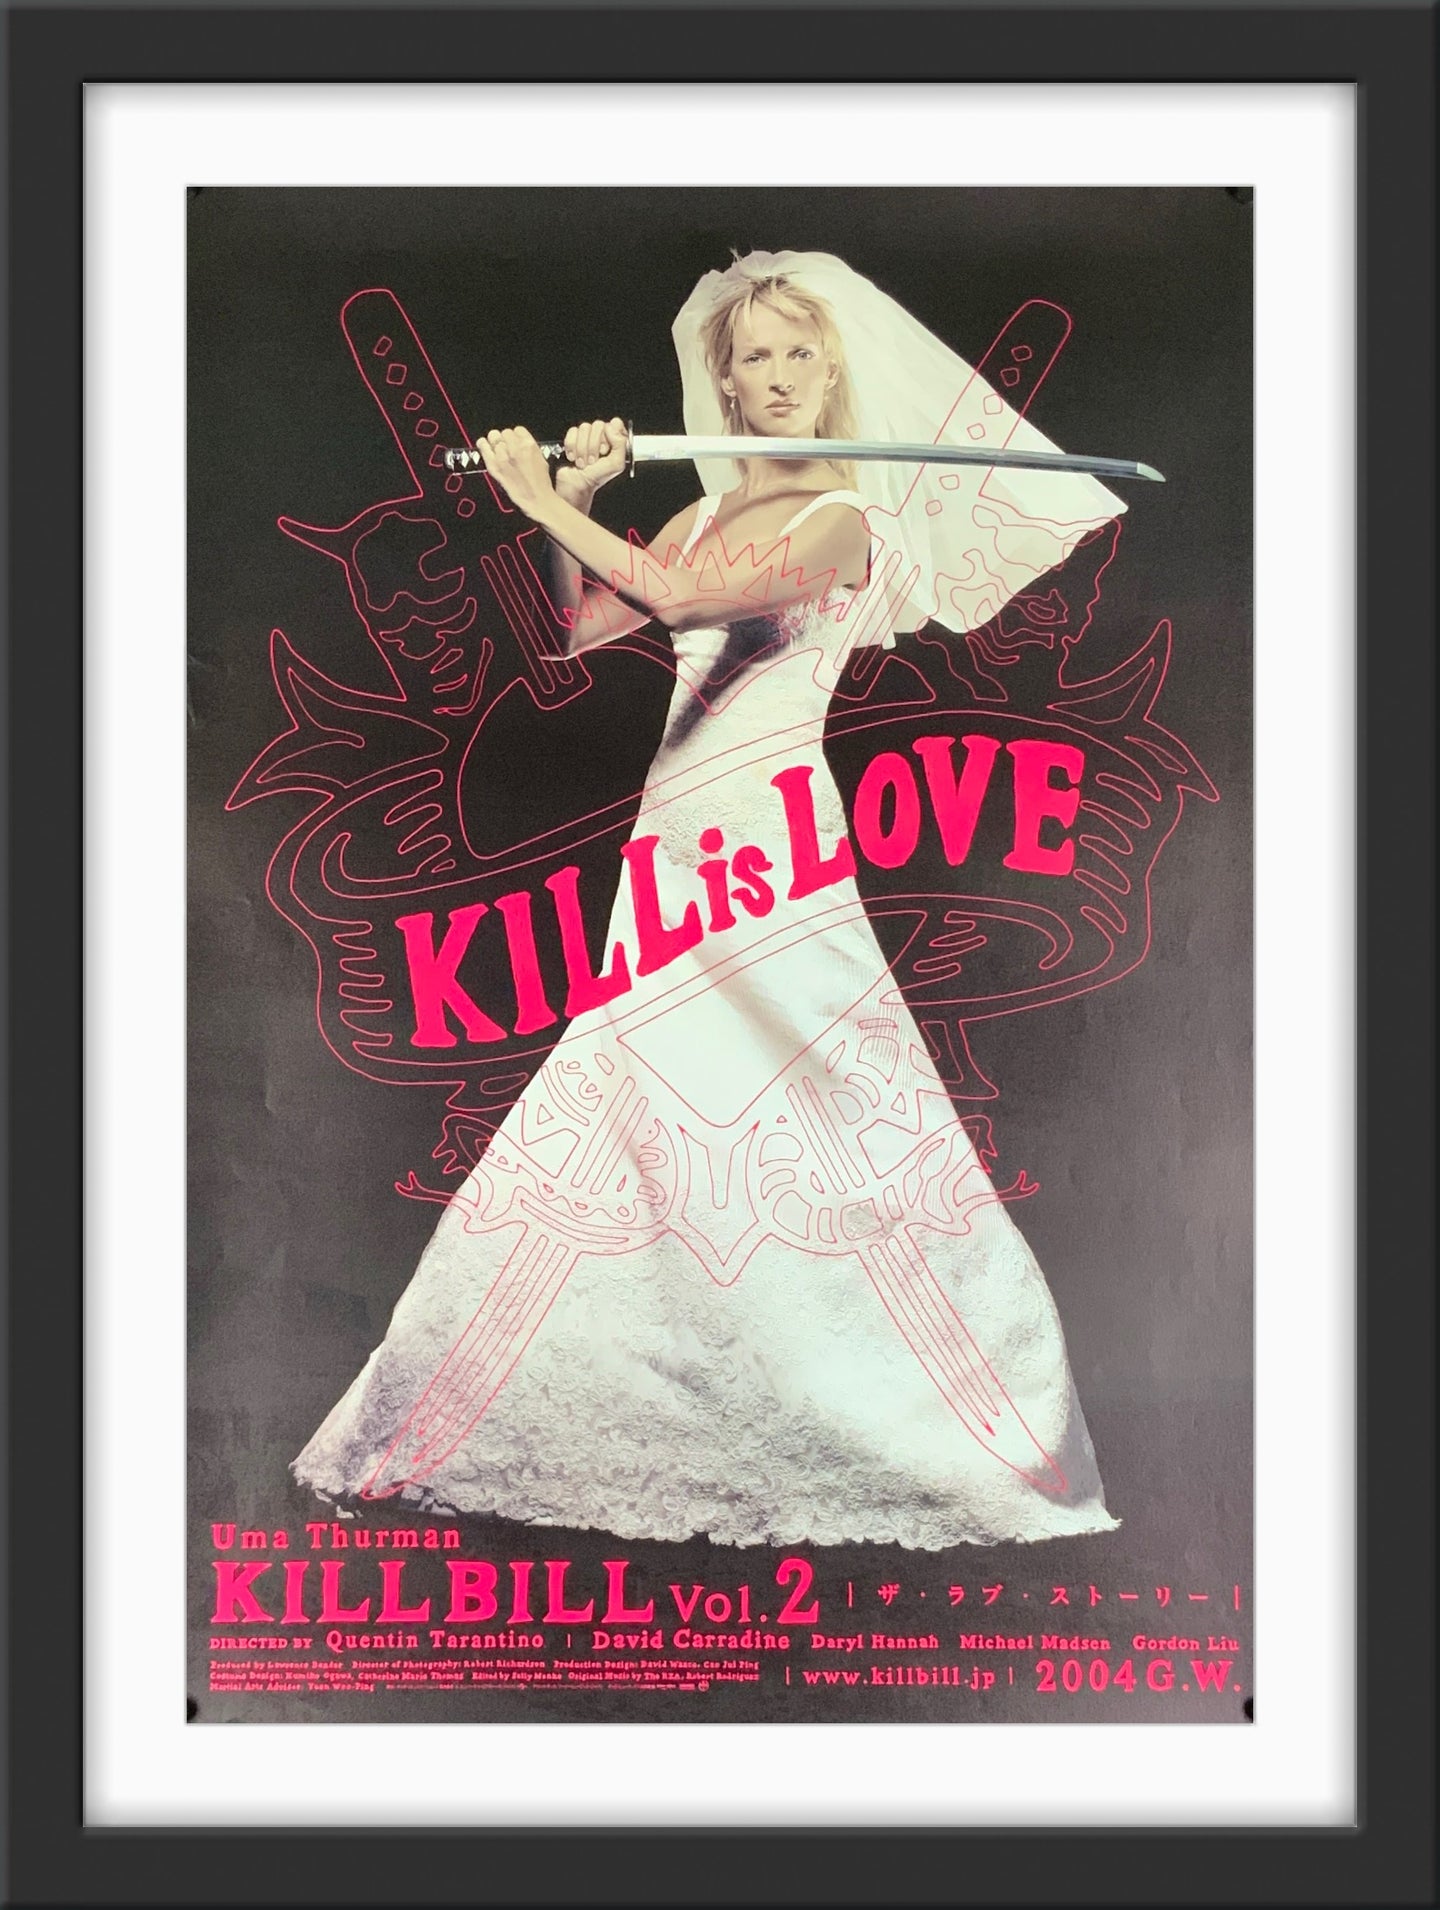 An original Japanese B2 movie poster for the Quentin Tarantino film Kill Bill volume 2